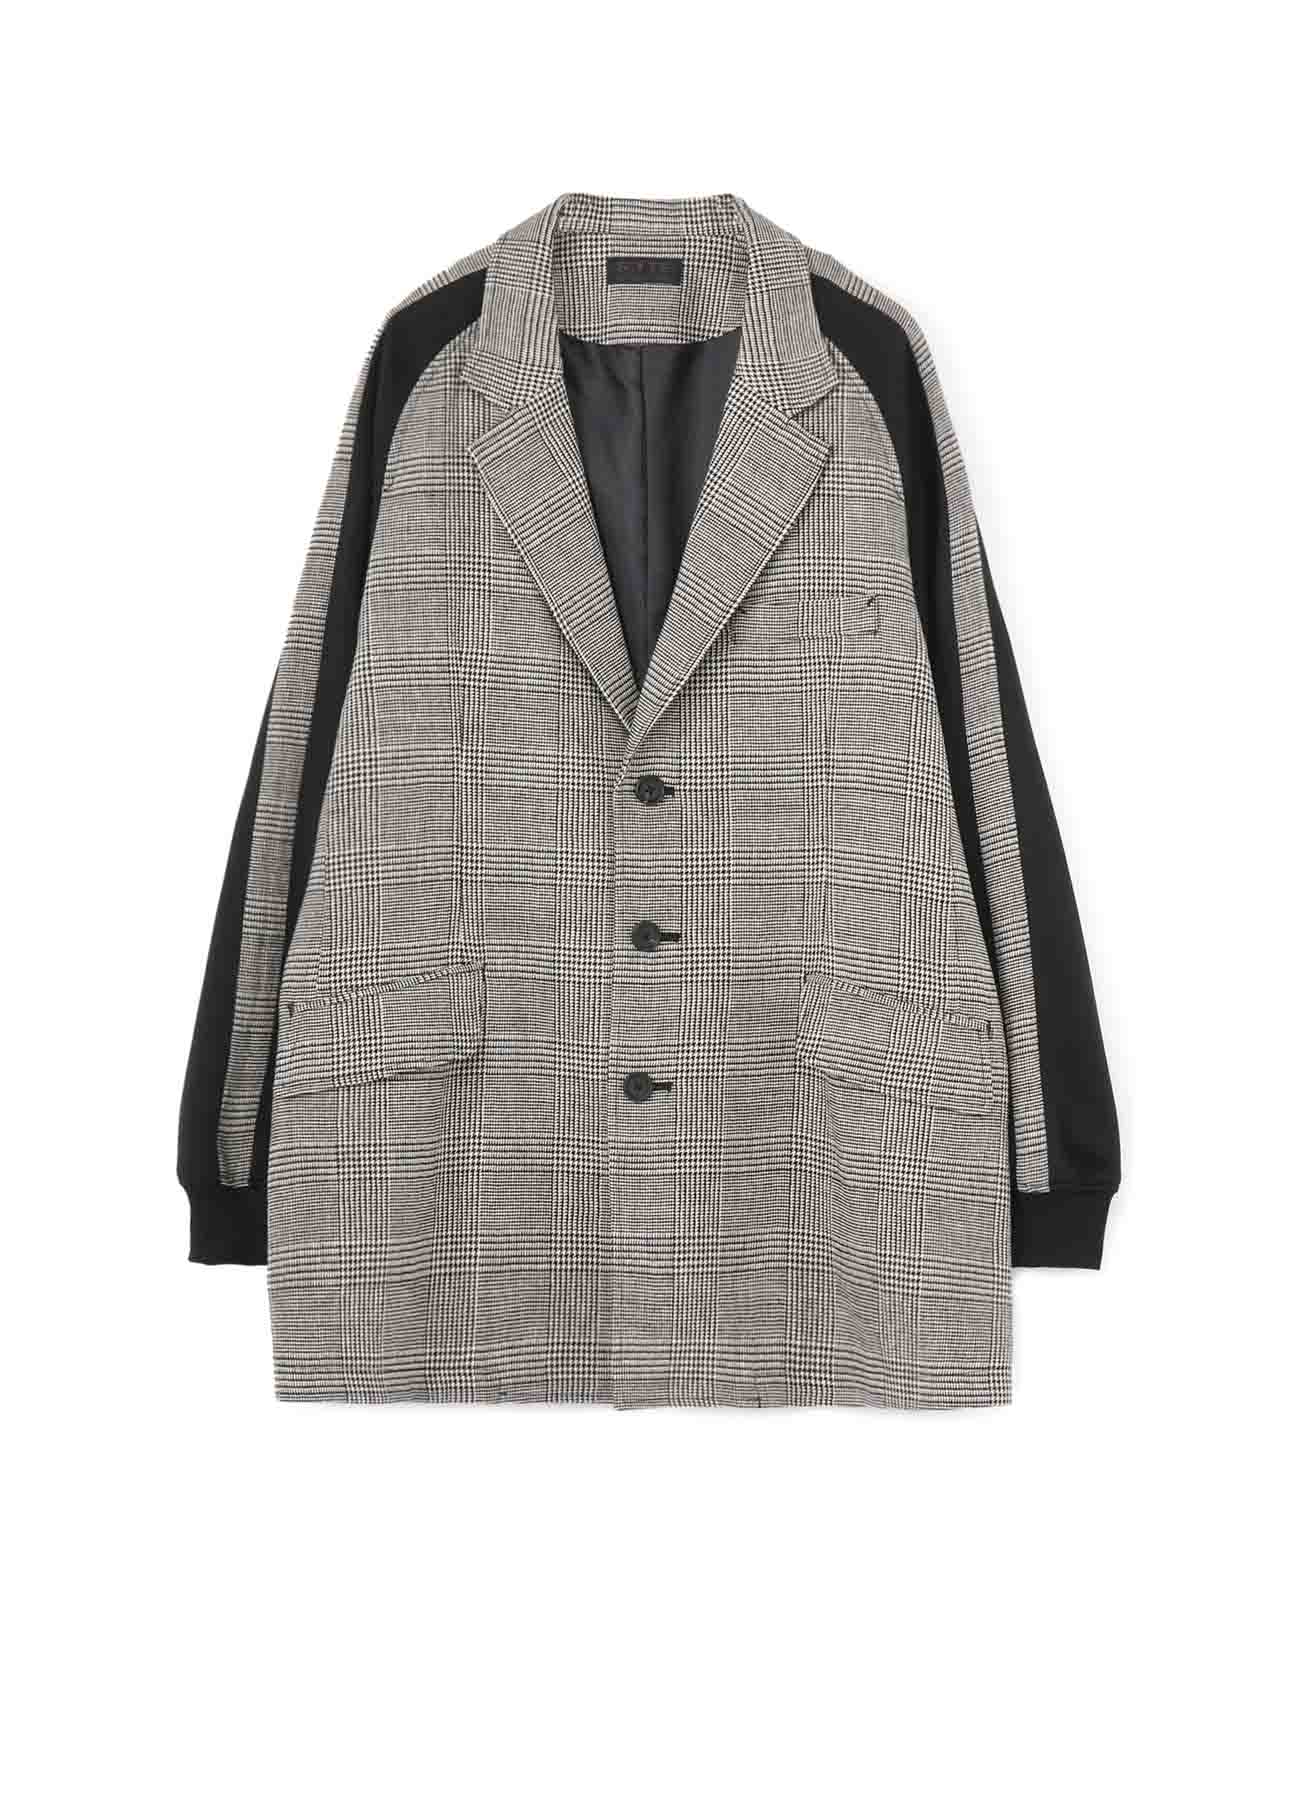 W/ Linen/Cotton Glen Check 3BS Jersey Sleeve Jacket